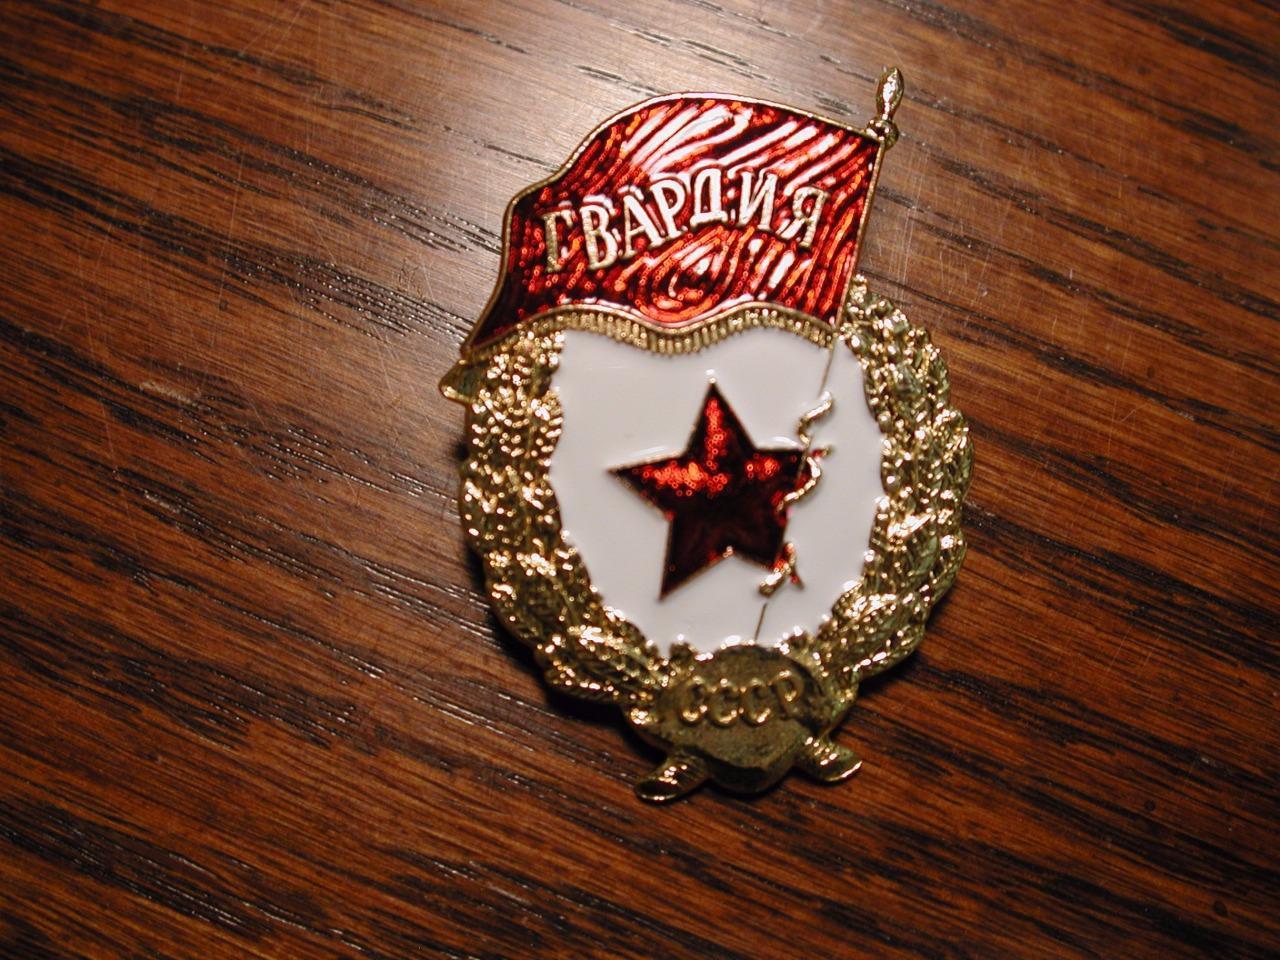 Authentic Soviet Gvardia (Grardiya) Pin worn by USSR Elite Guard Unit